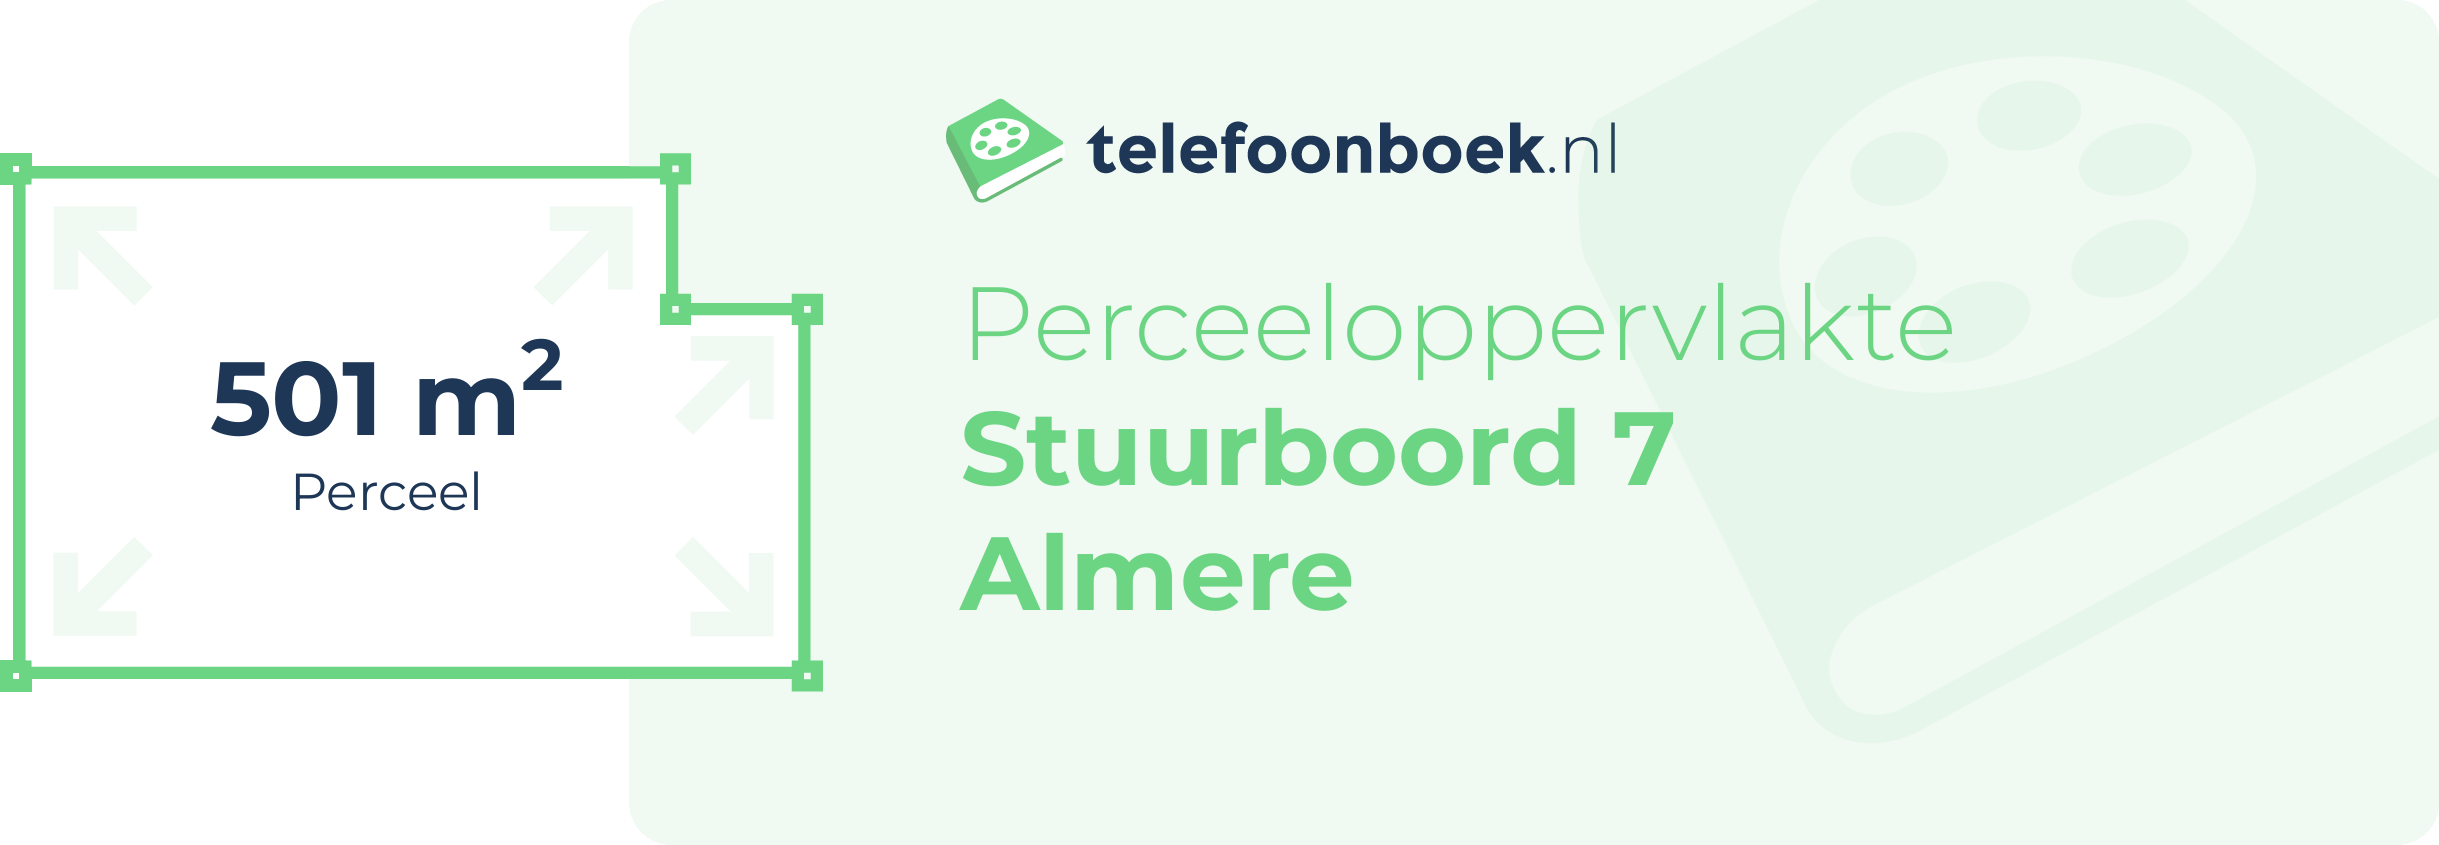 Perceeloppervlakte Stuurboord 7 Almere